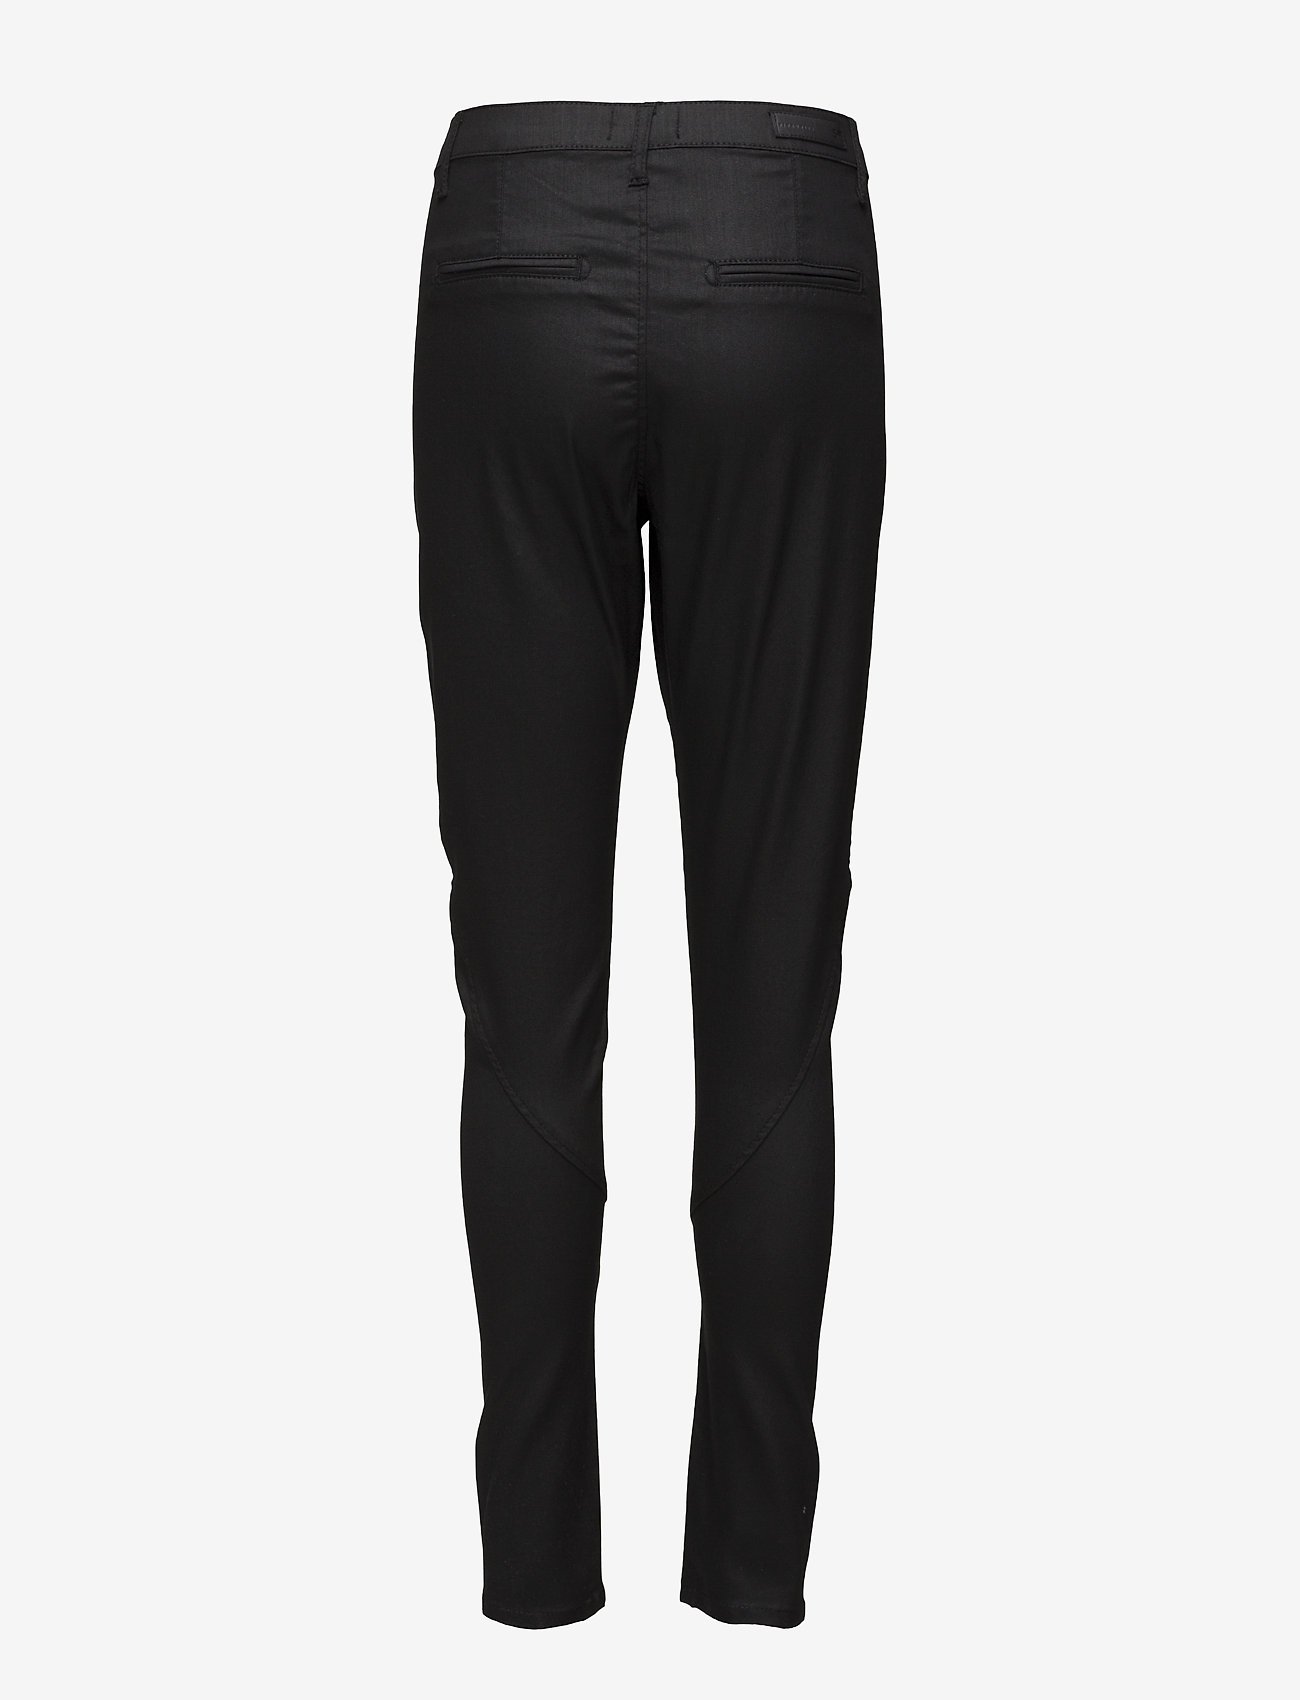 FIVEUNITS - Jolie - slim fit trousers - black coated - 1